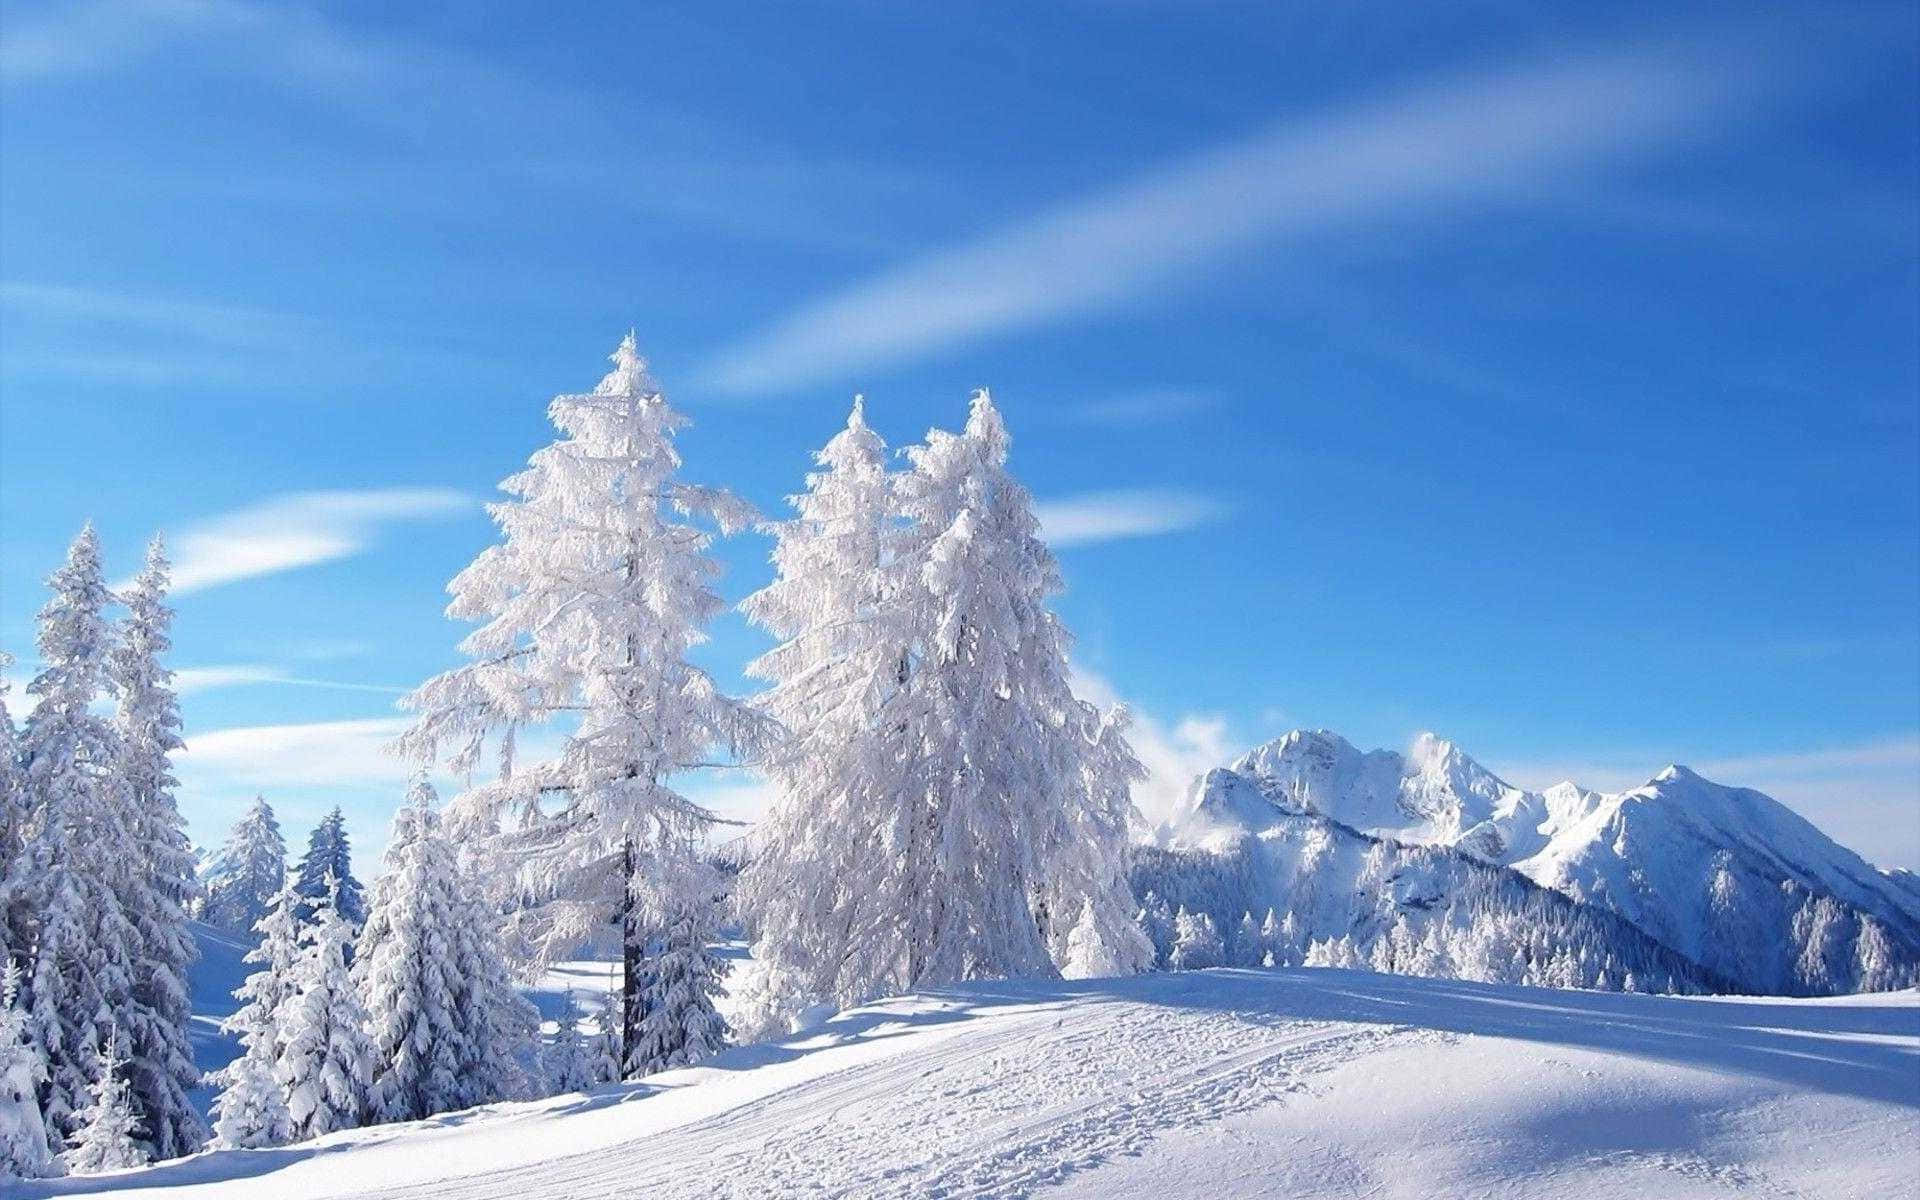 Snow-covered Mountain Winter Wonderland Background